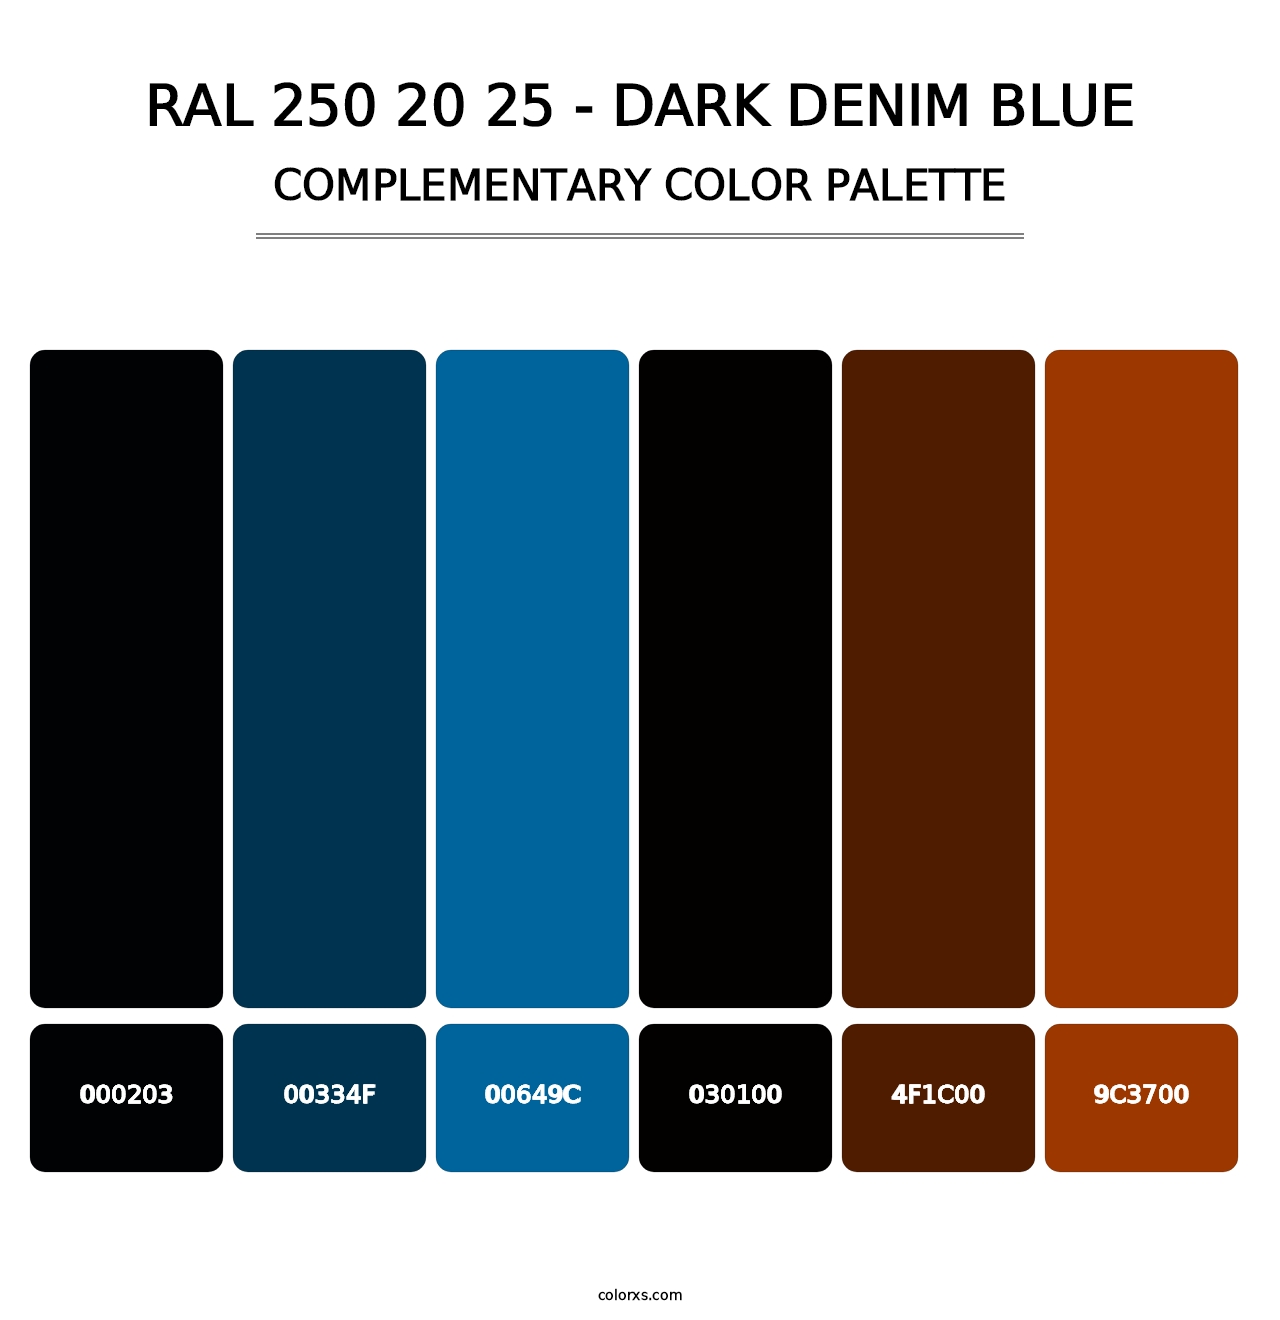 RAL 250 20 25 - Dark Denim Blue - Complementary Color Palette